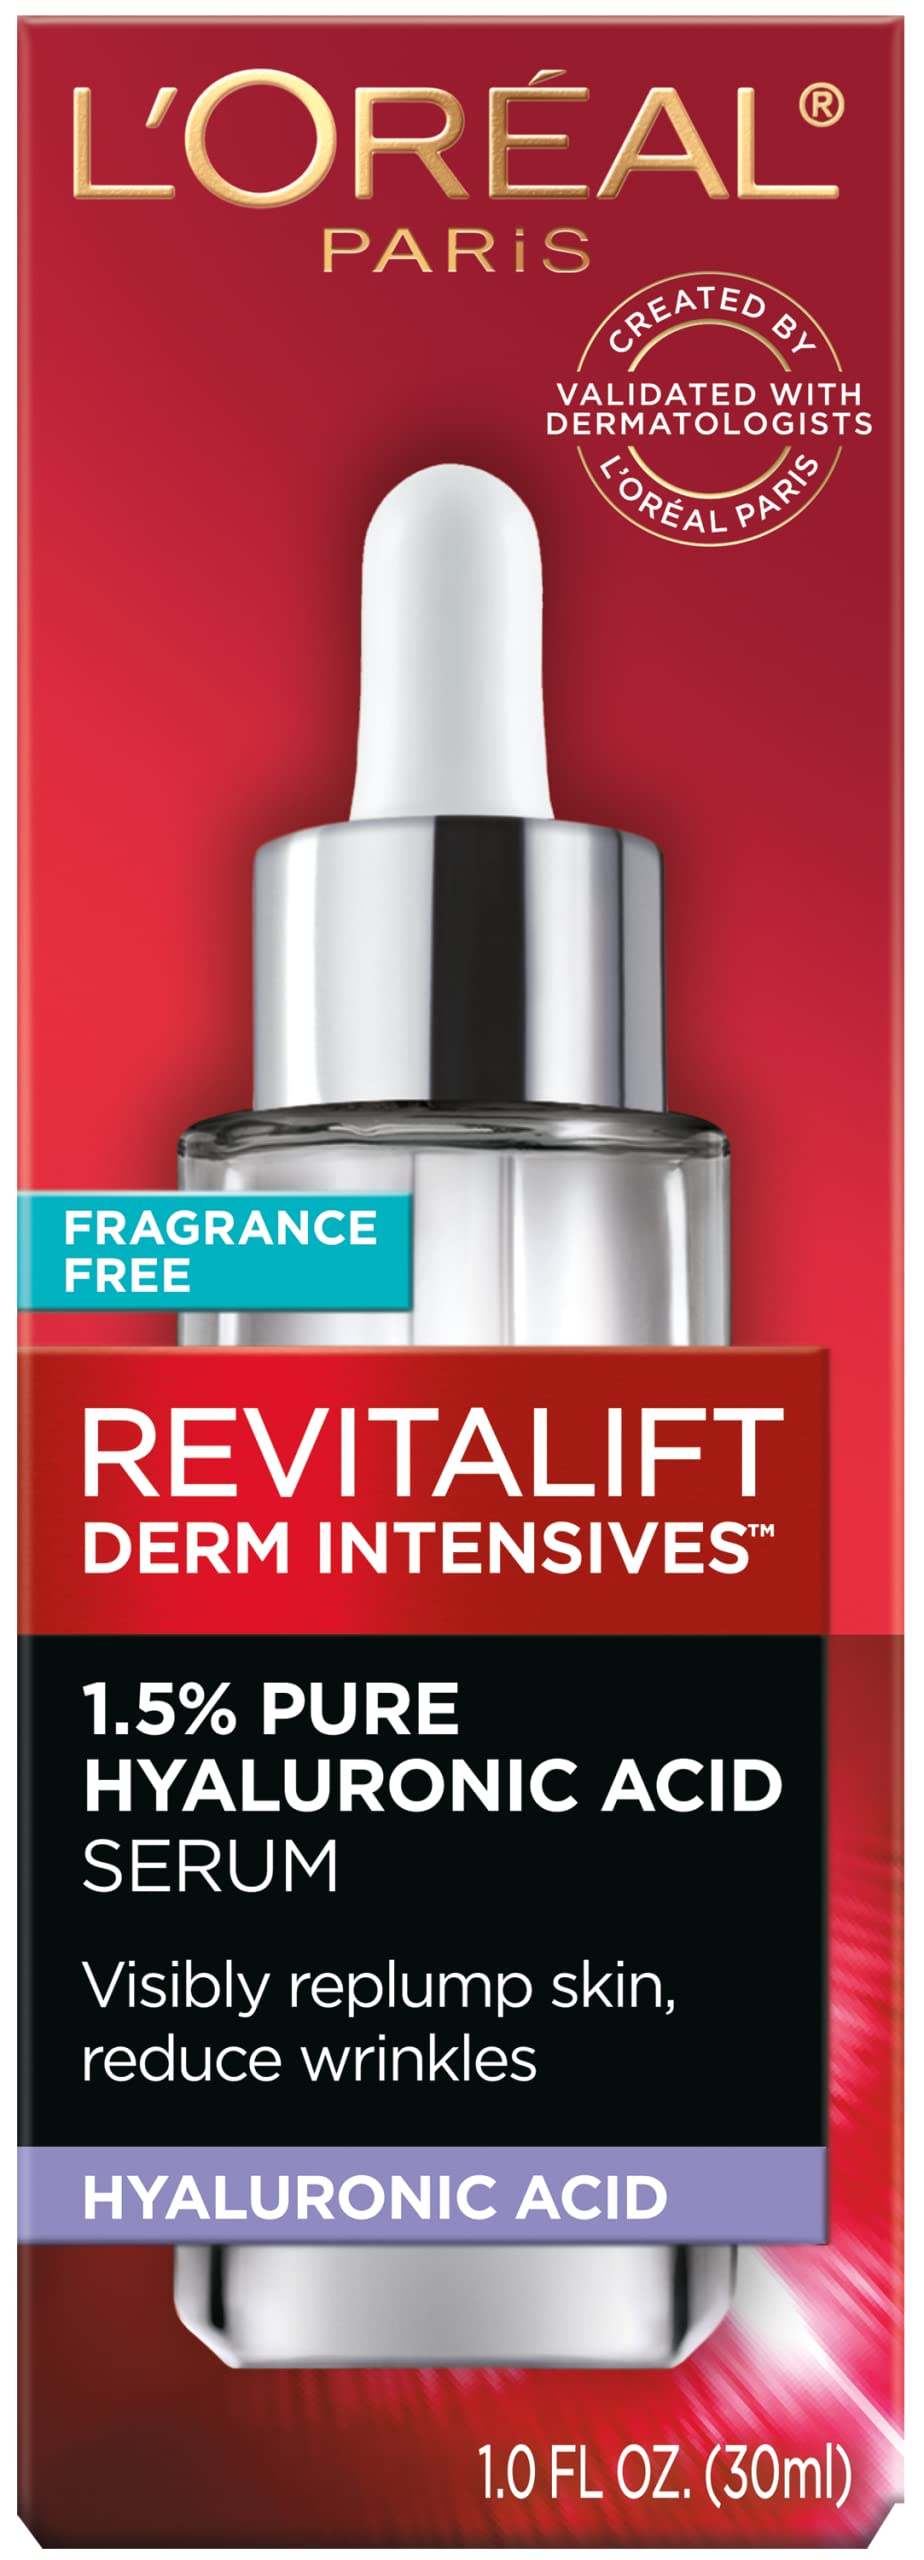 L'Oreal Paris Revitalift 1.5% Pure Hyaluronic Acid Face Serum, Hydrate & Reduce Wrinkles, Fragrance Free 1 oz